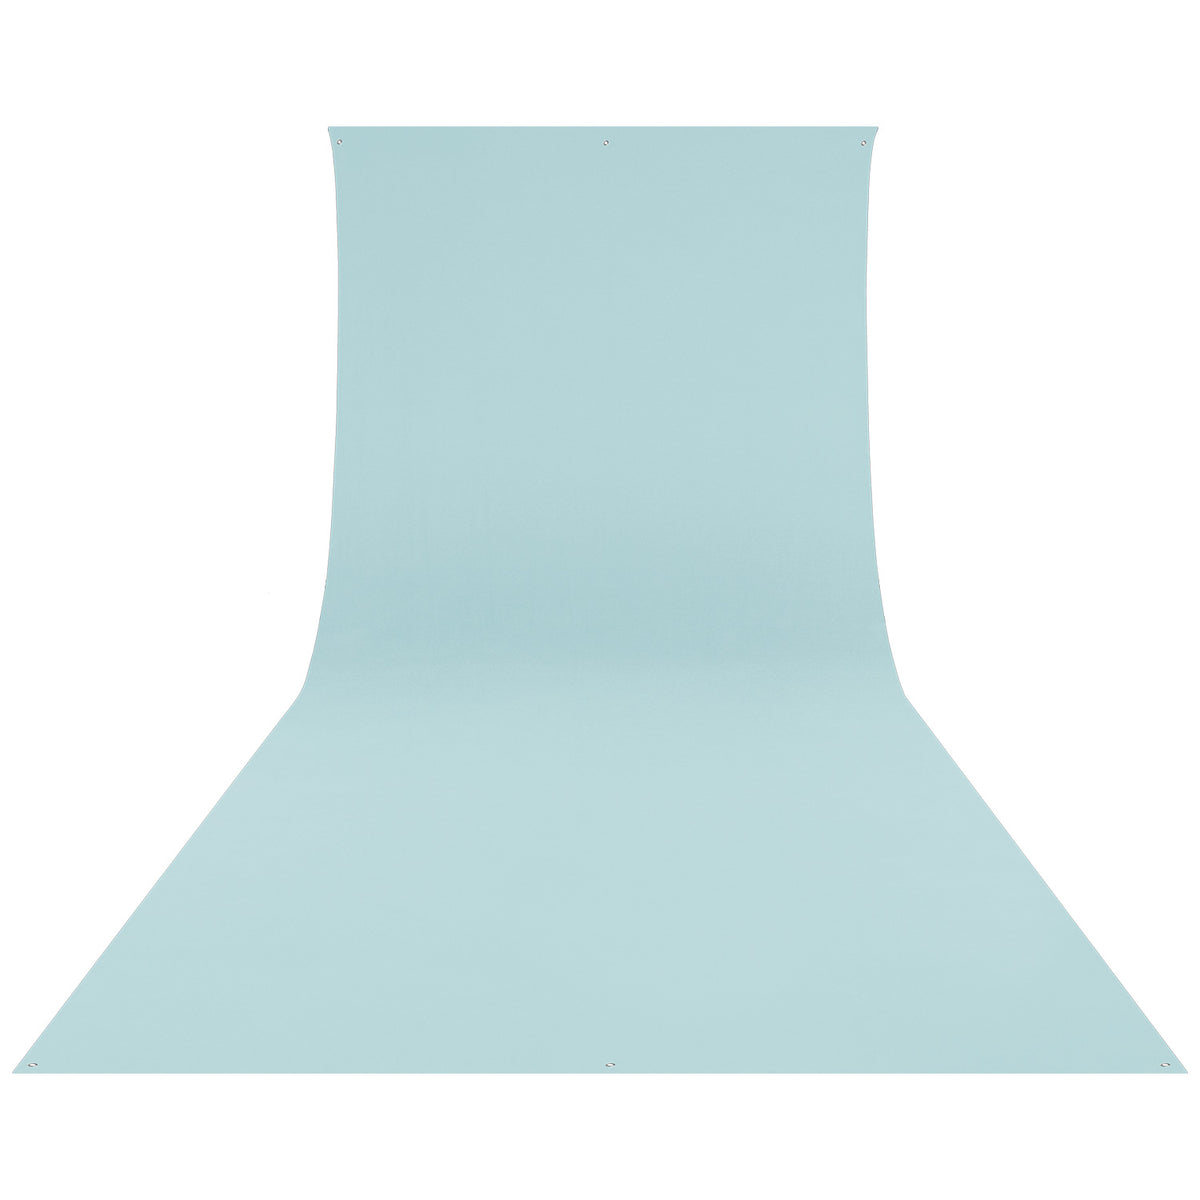 Wrinkle-Resistant Backdrop - Pastel Blue (9' x 20')